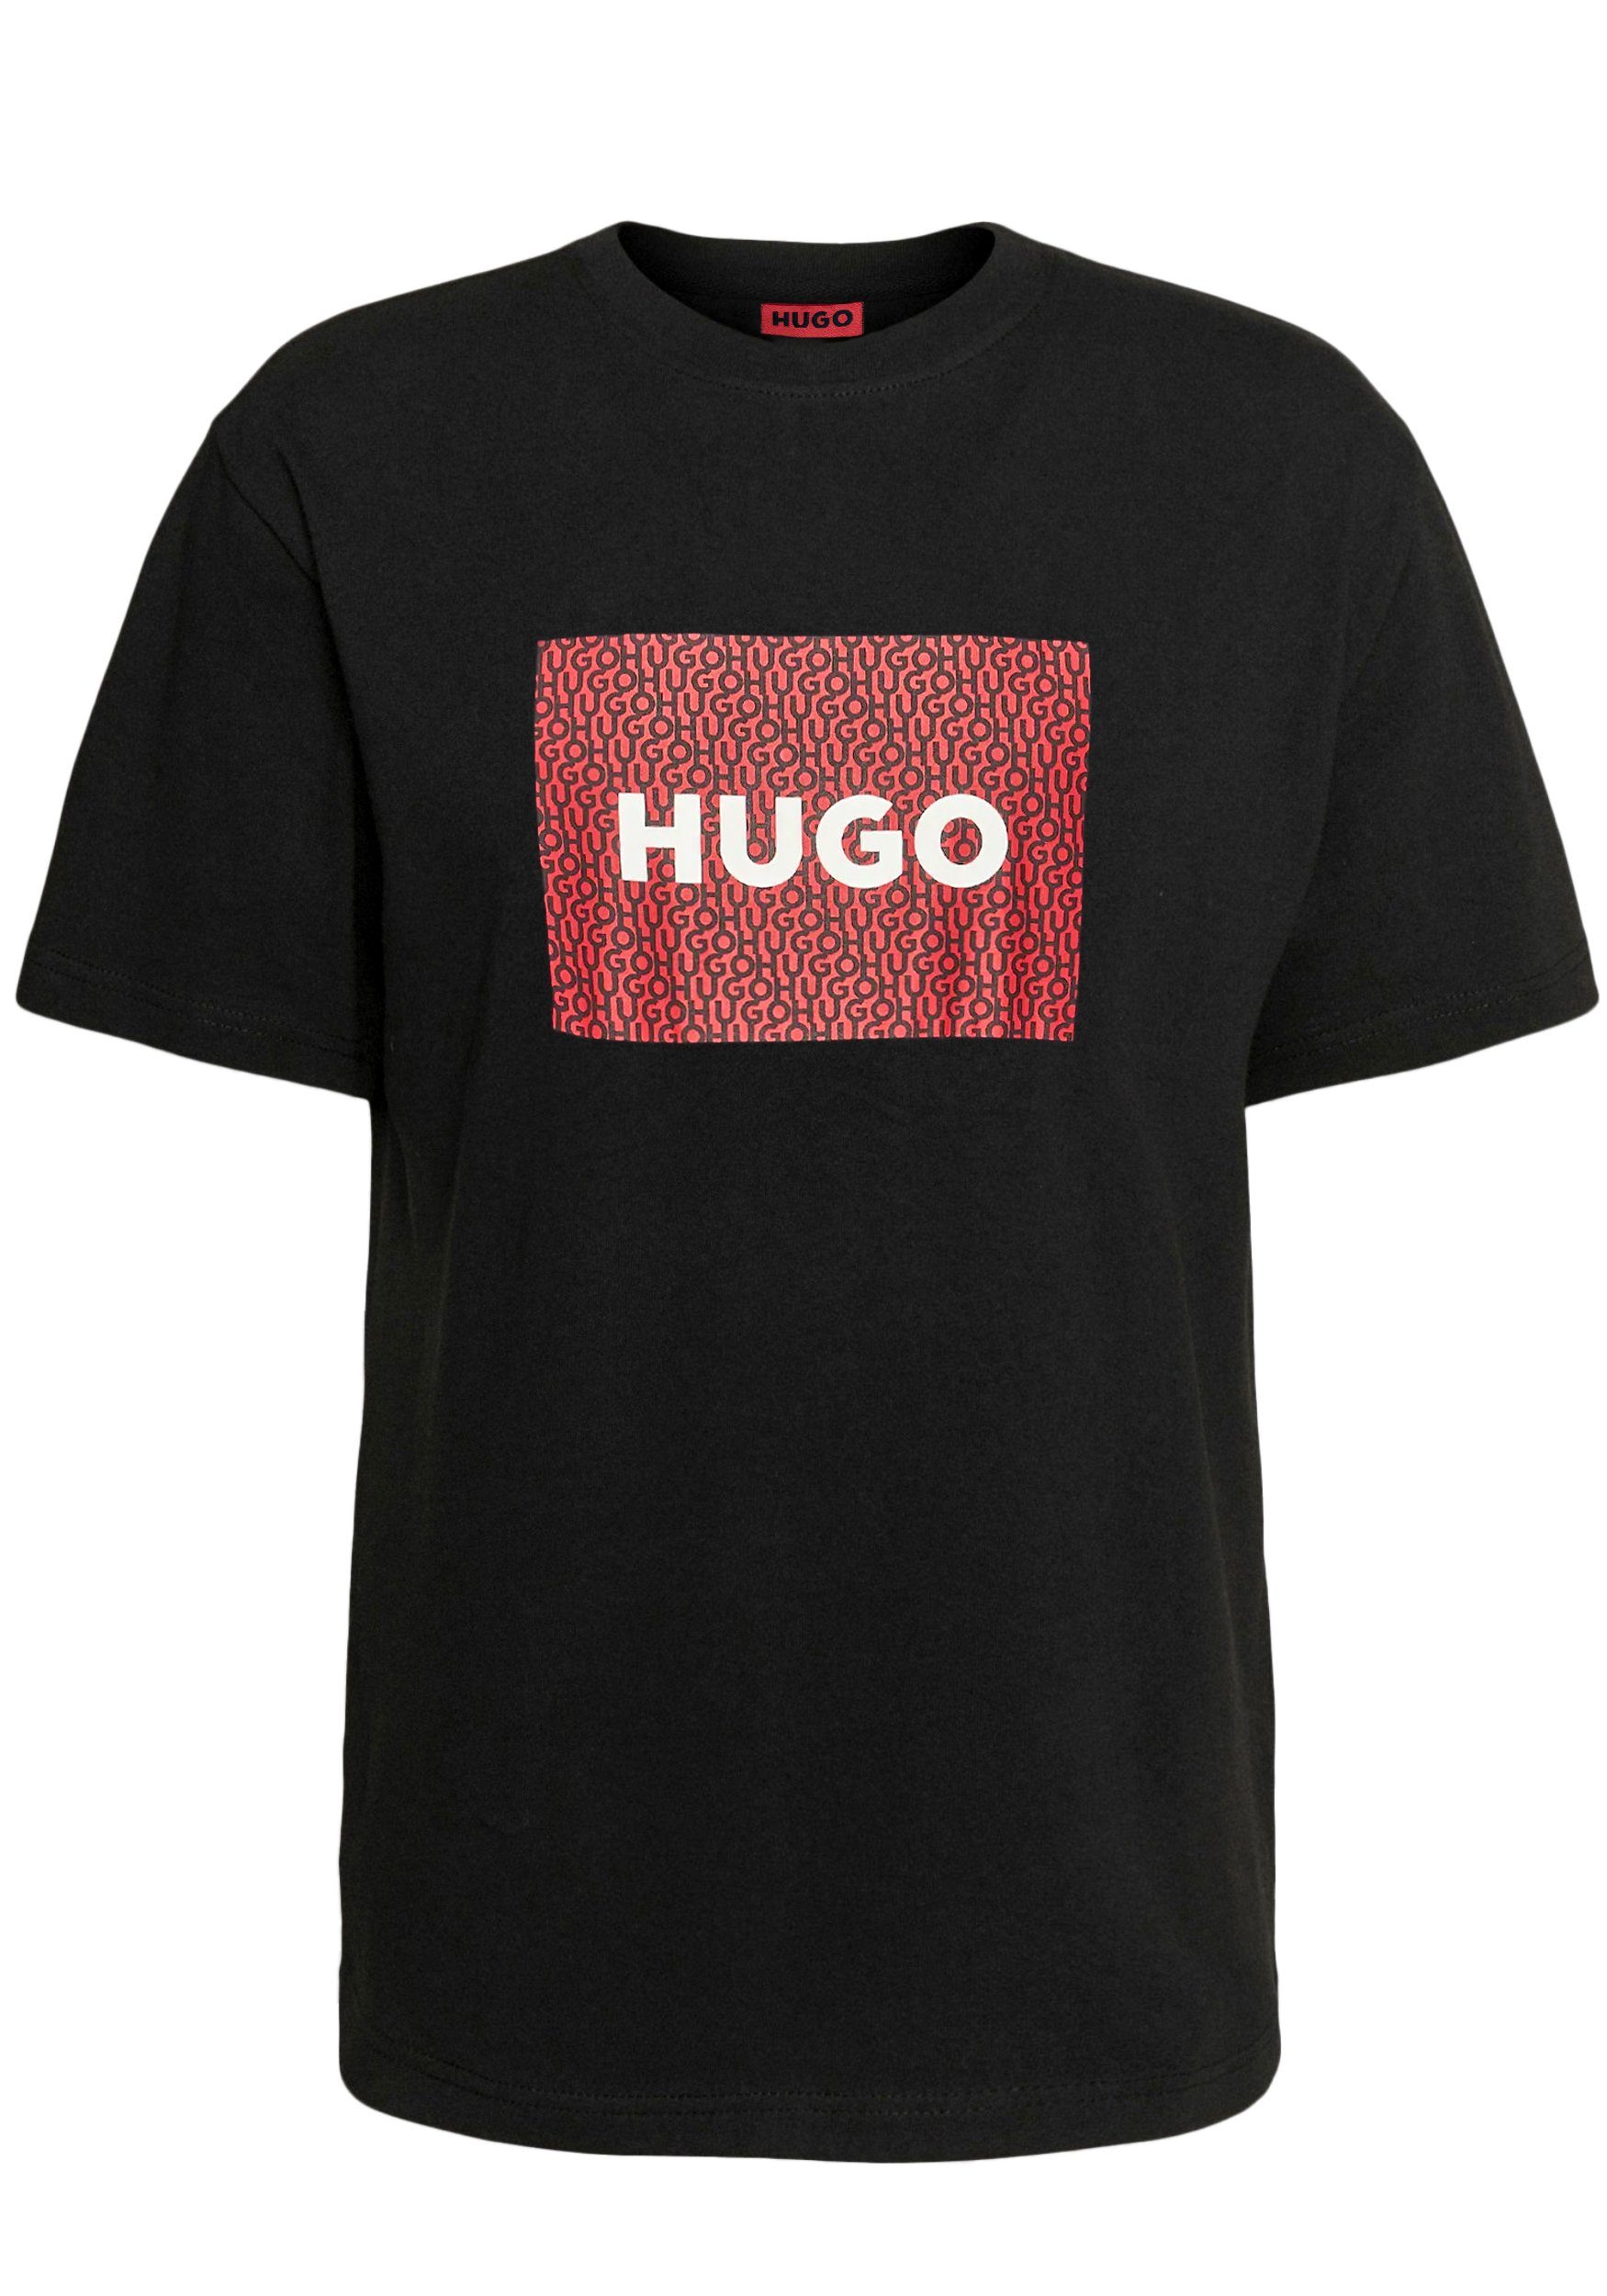 HUGO T-Shirt Hugo Shirt Print Brust Herren Dulive auf Boss der Kurzarm Schwarz Logo